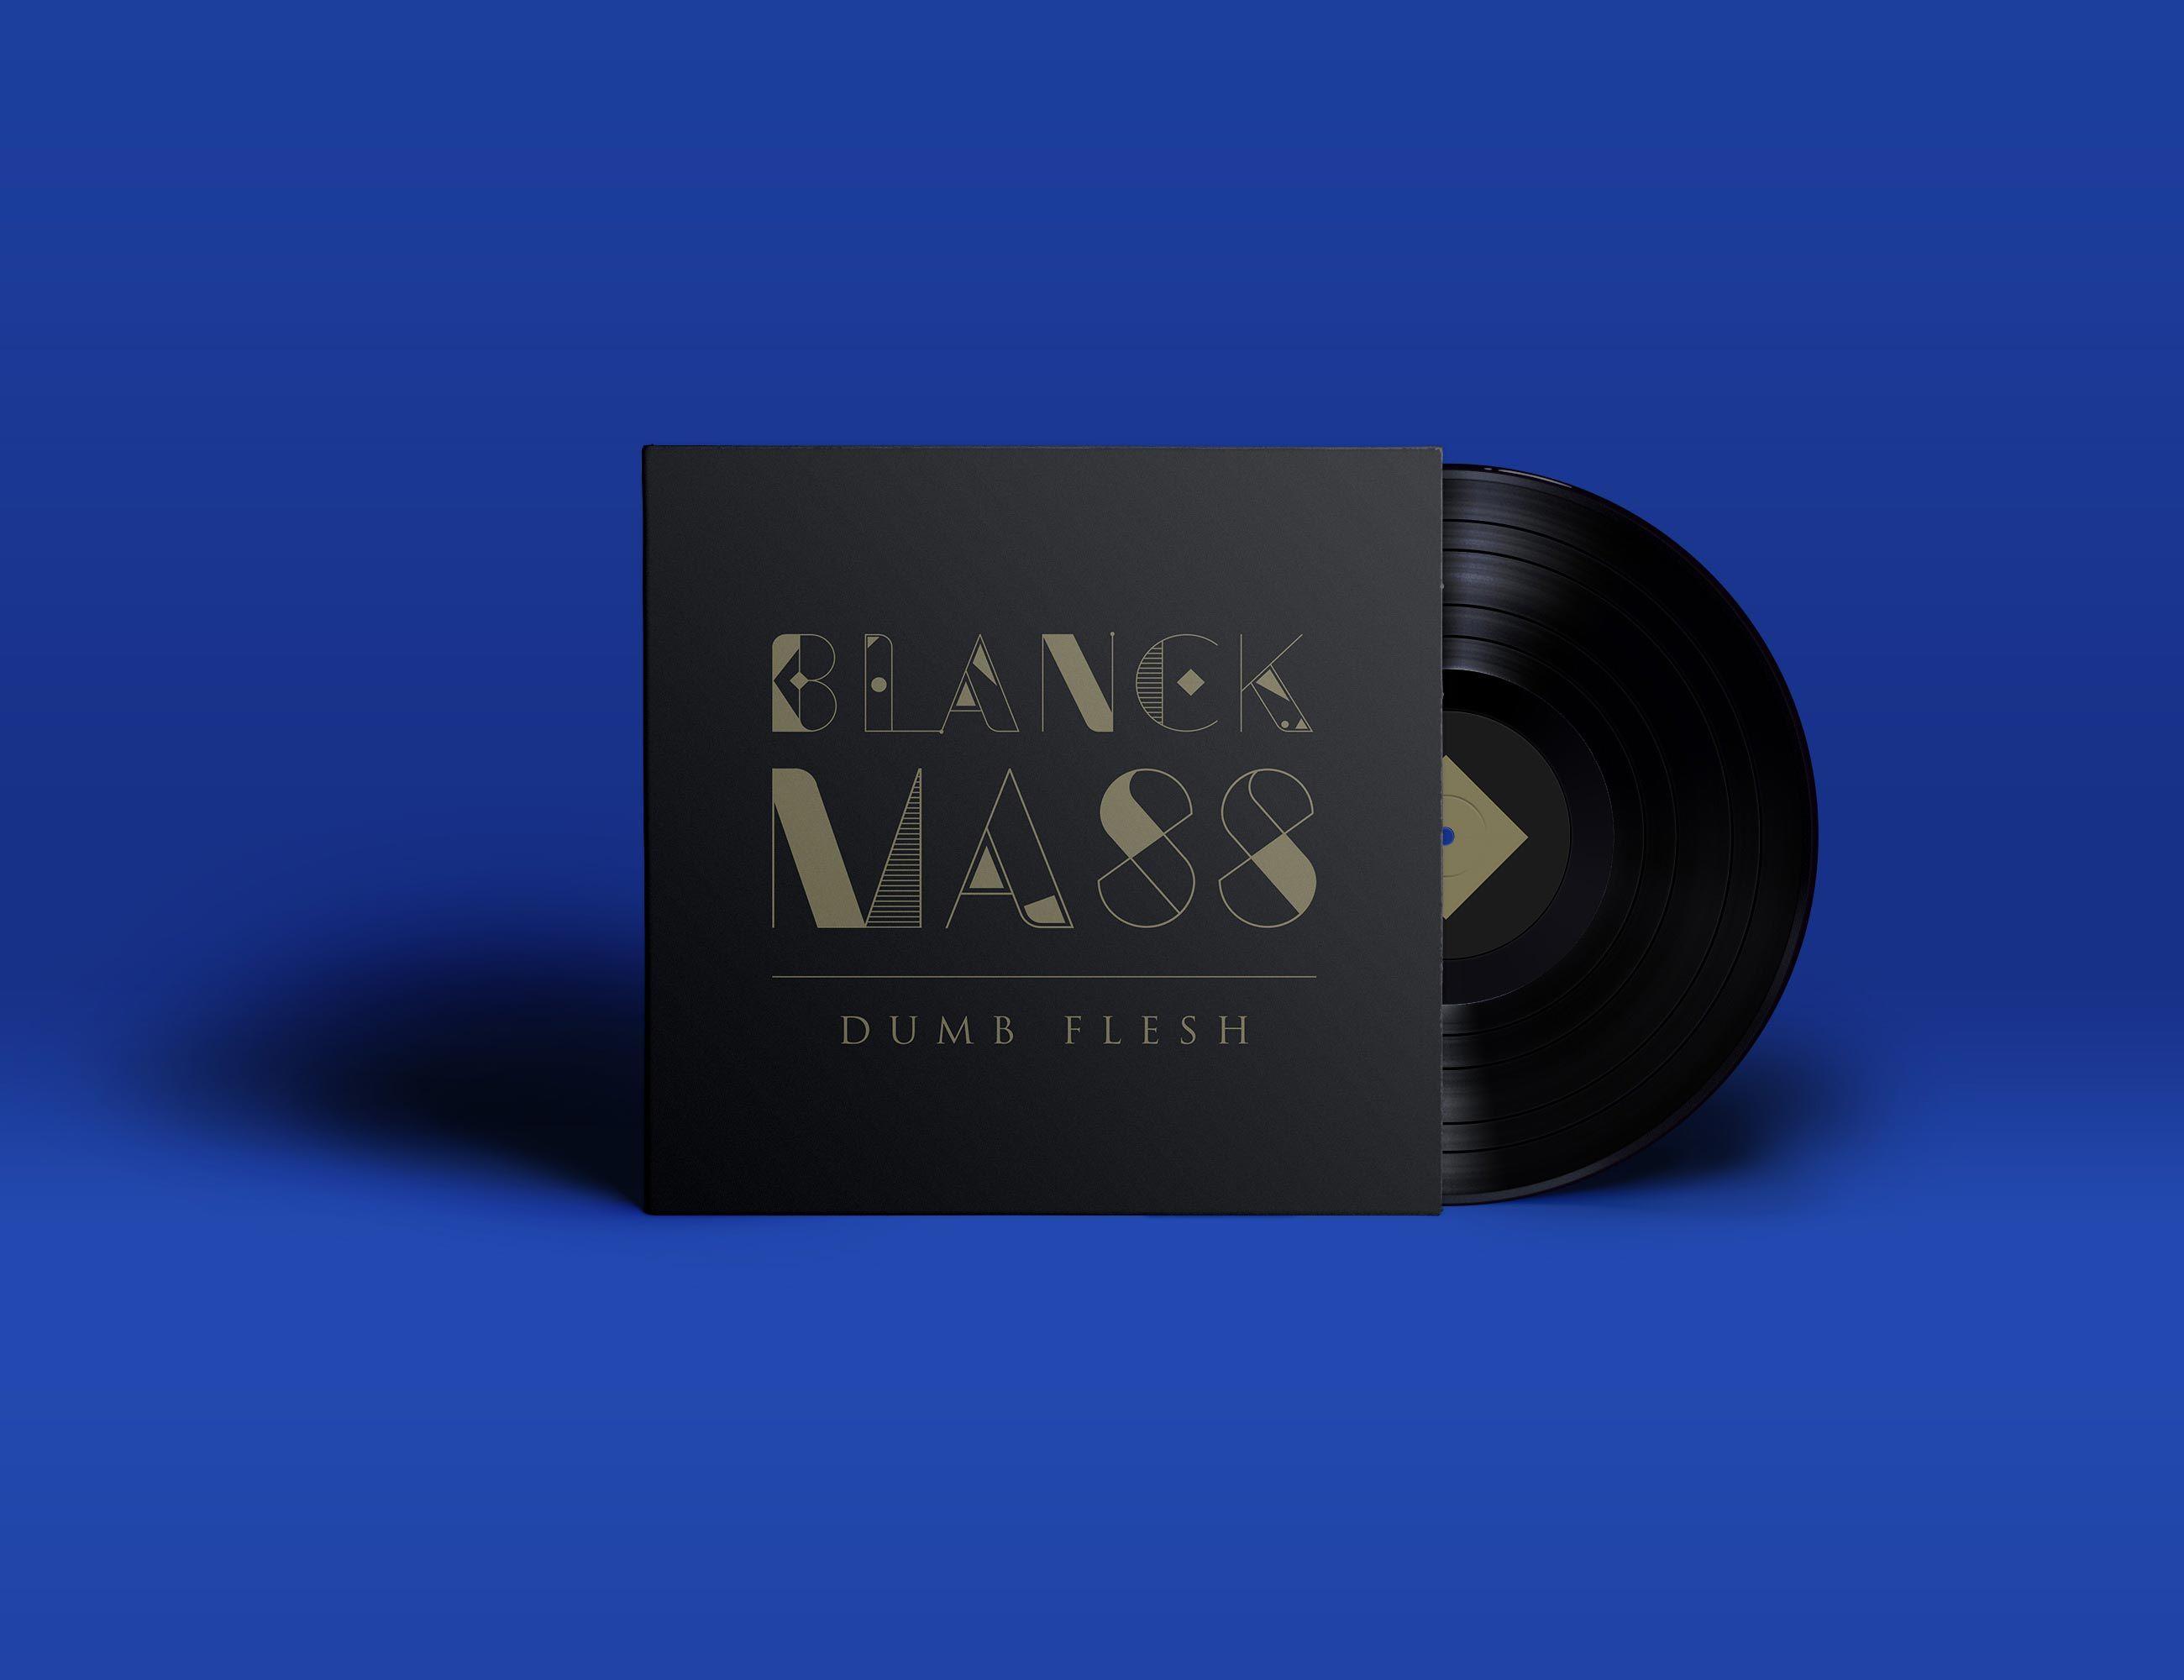 Album Logo - Blanck Mass: Album Art design, Typography & Logo Design